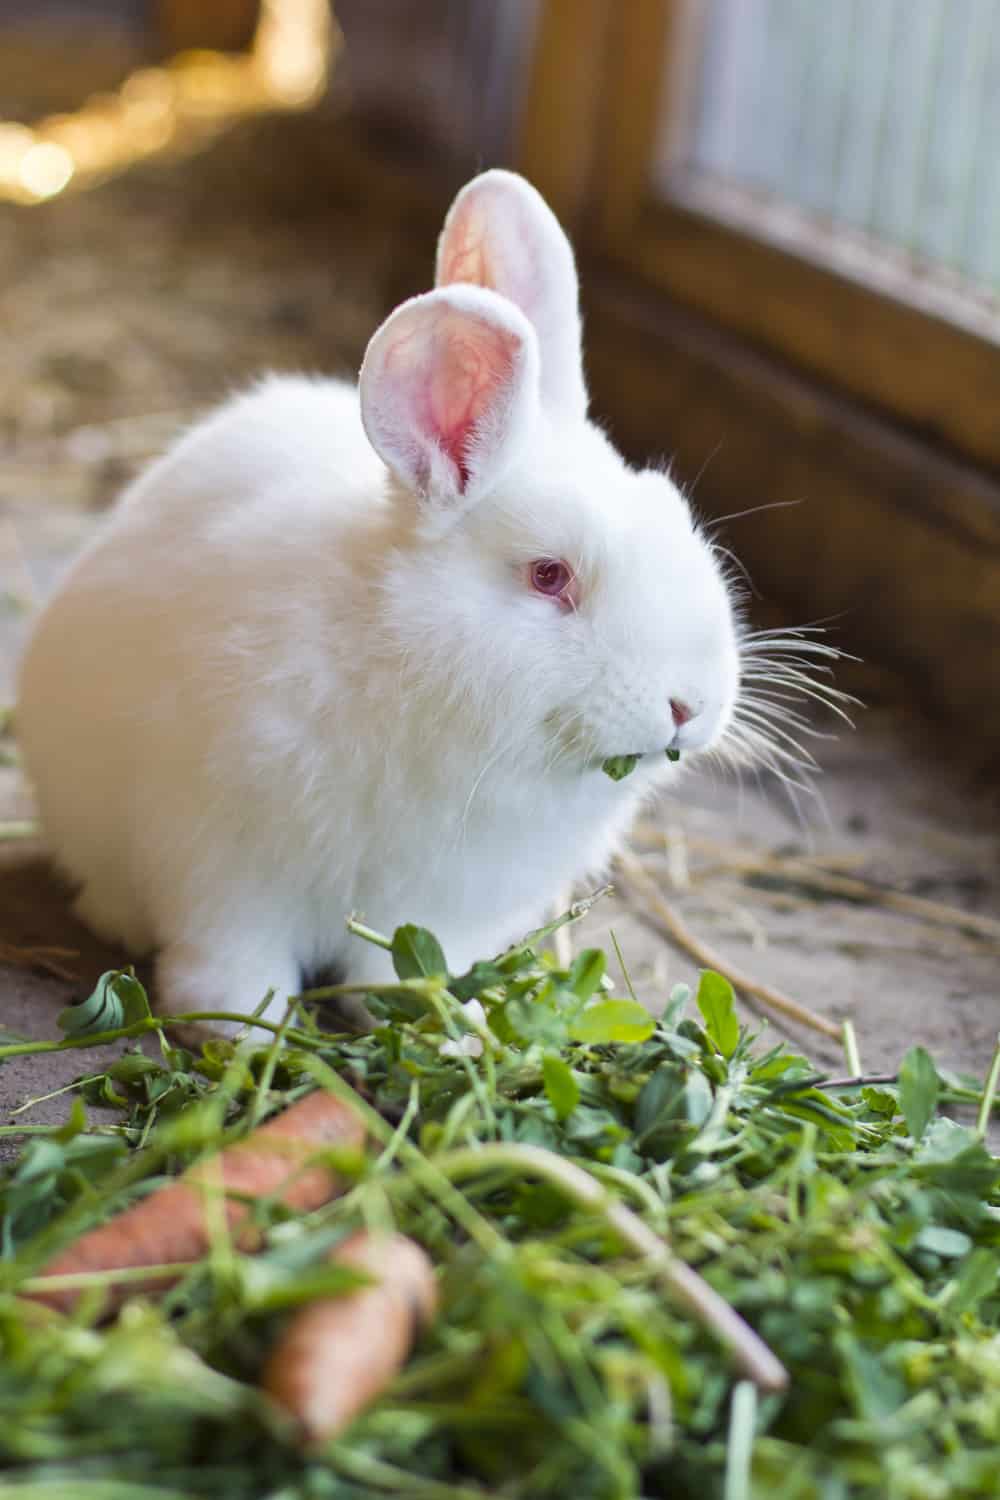 Carrot Tops Risks for Rabbits